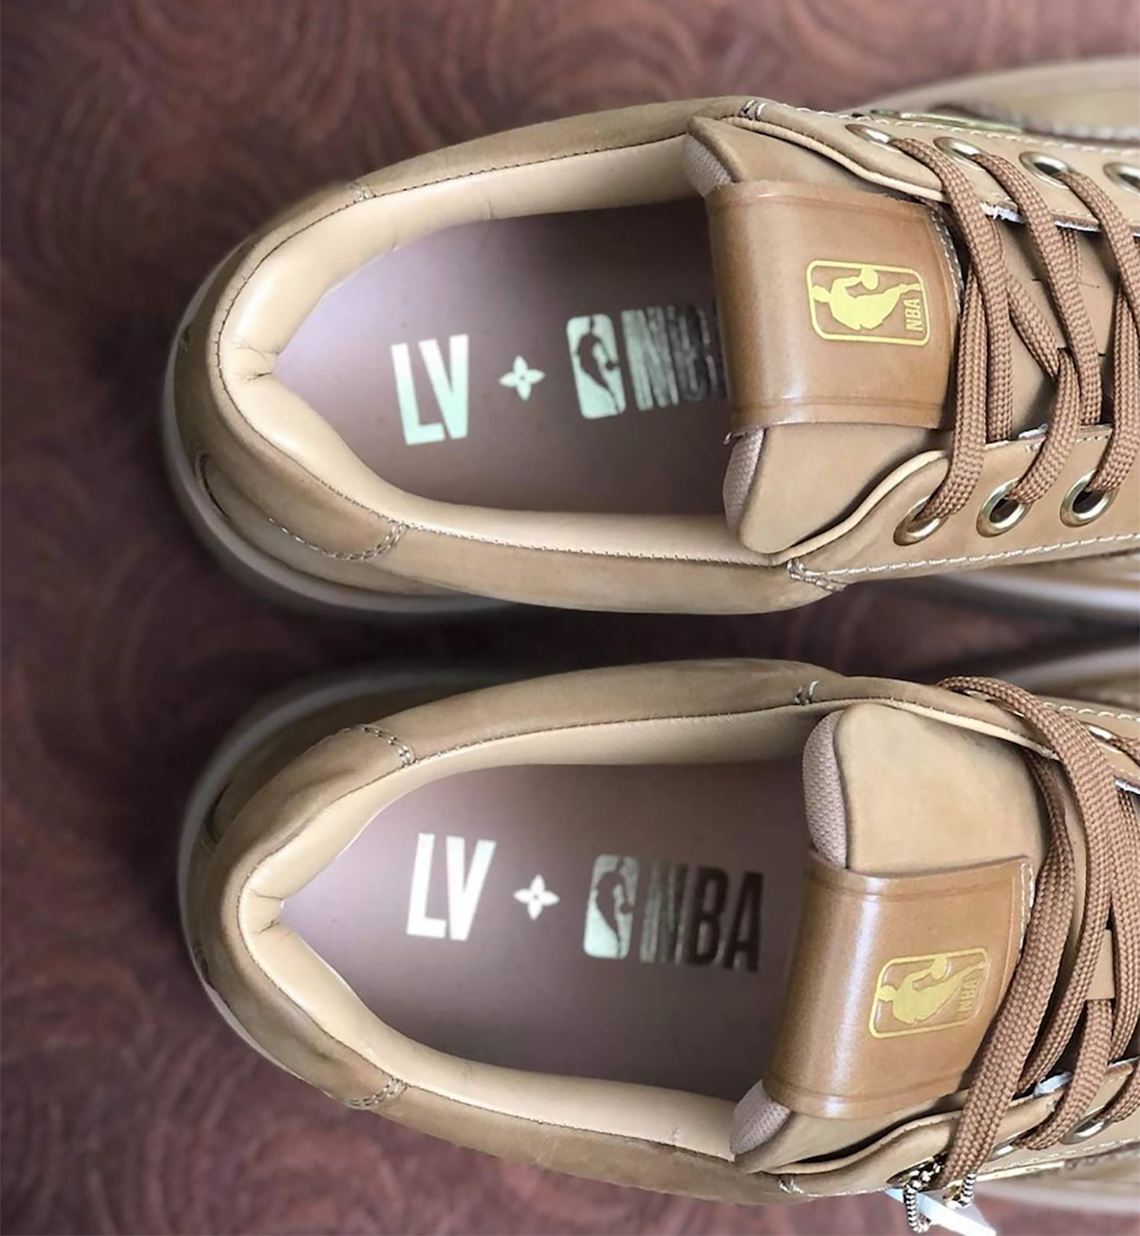 Louis Vuitton x NBA Brown 2020 Nubuck Hiking Boots11